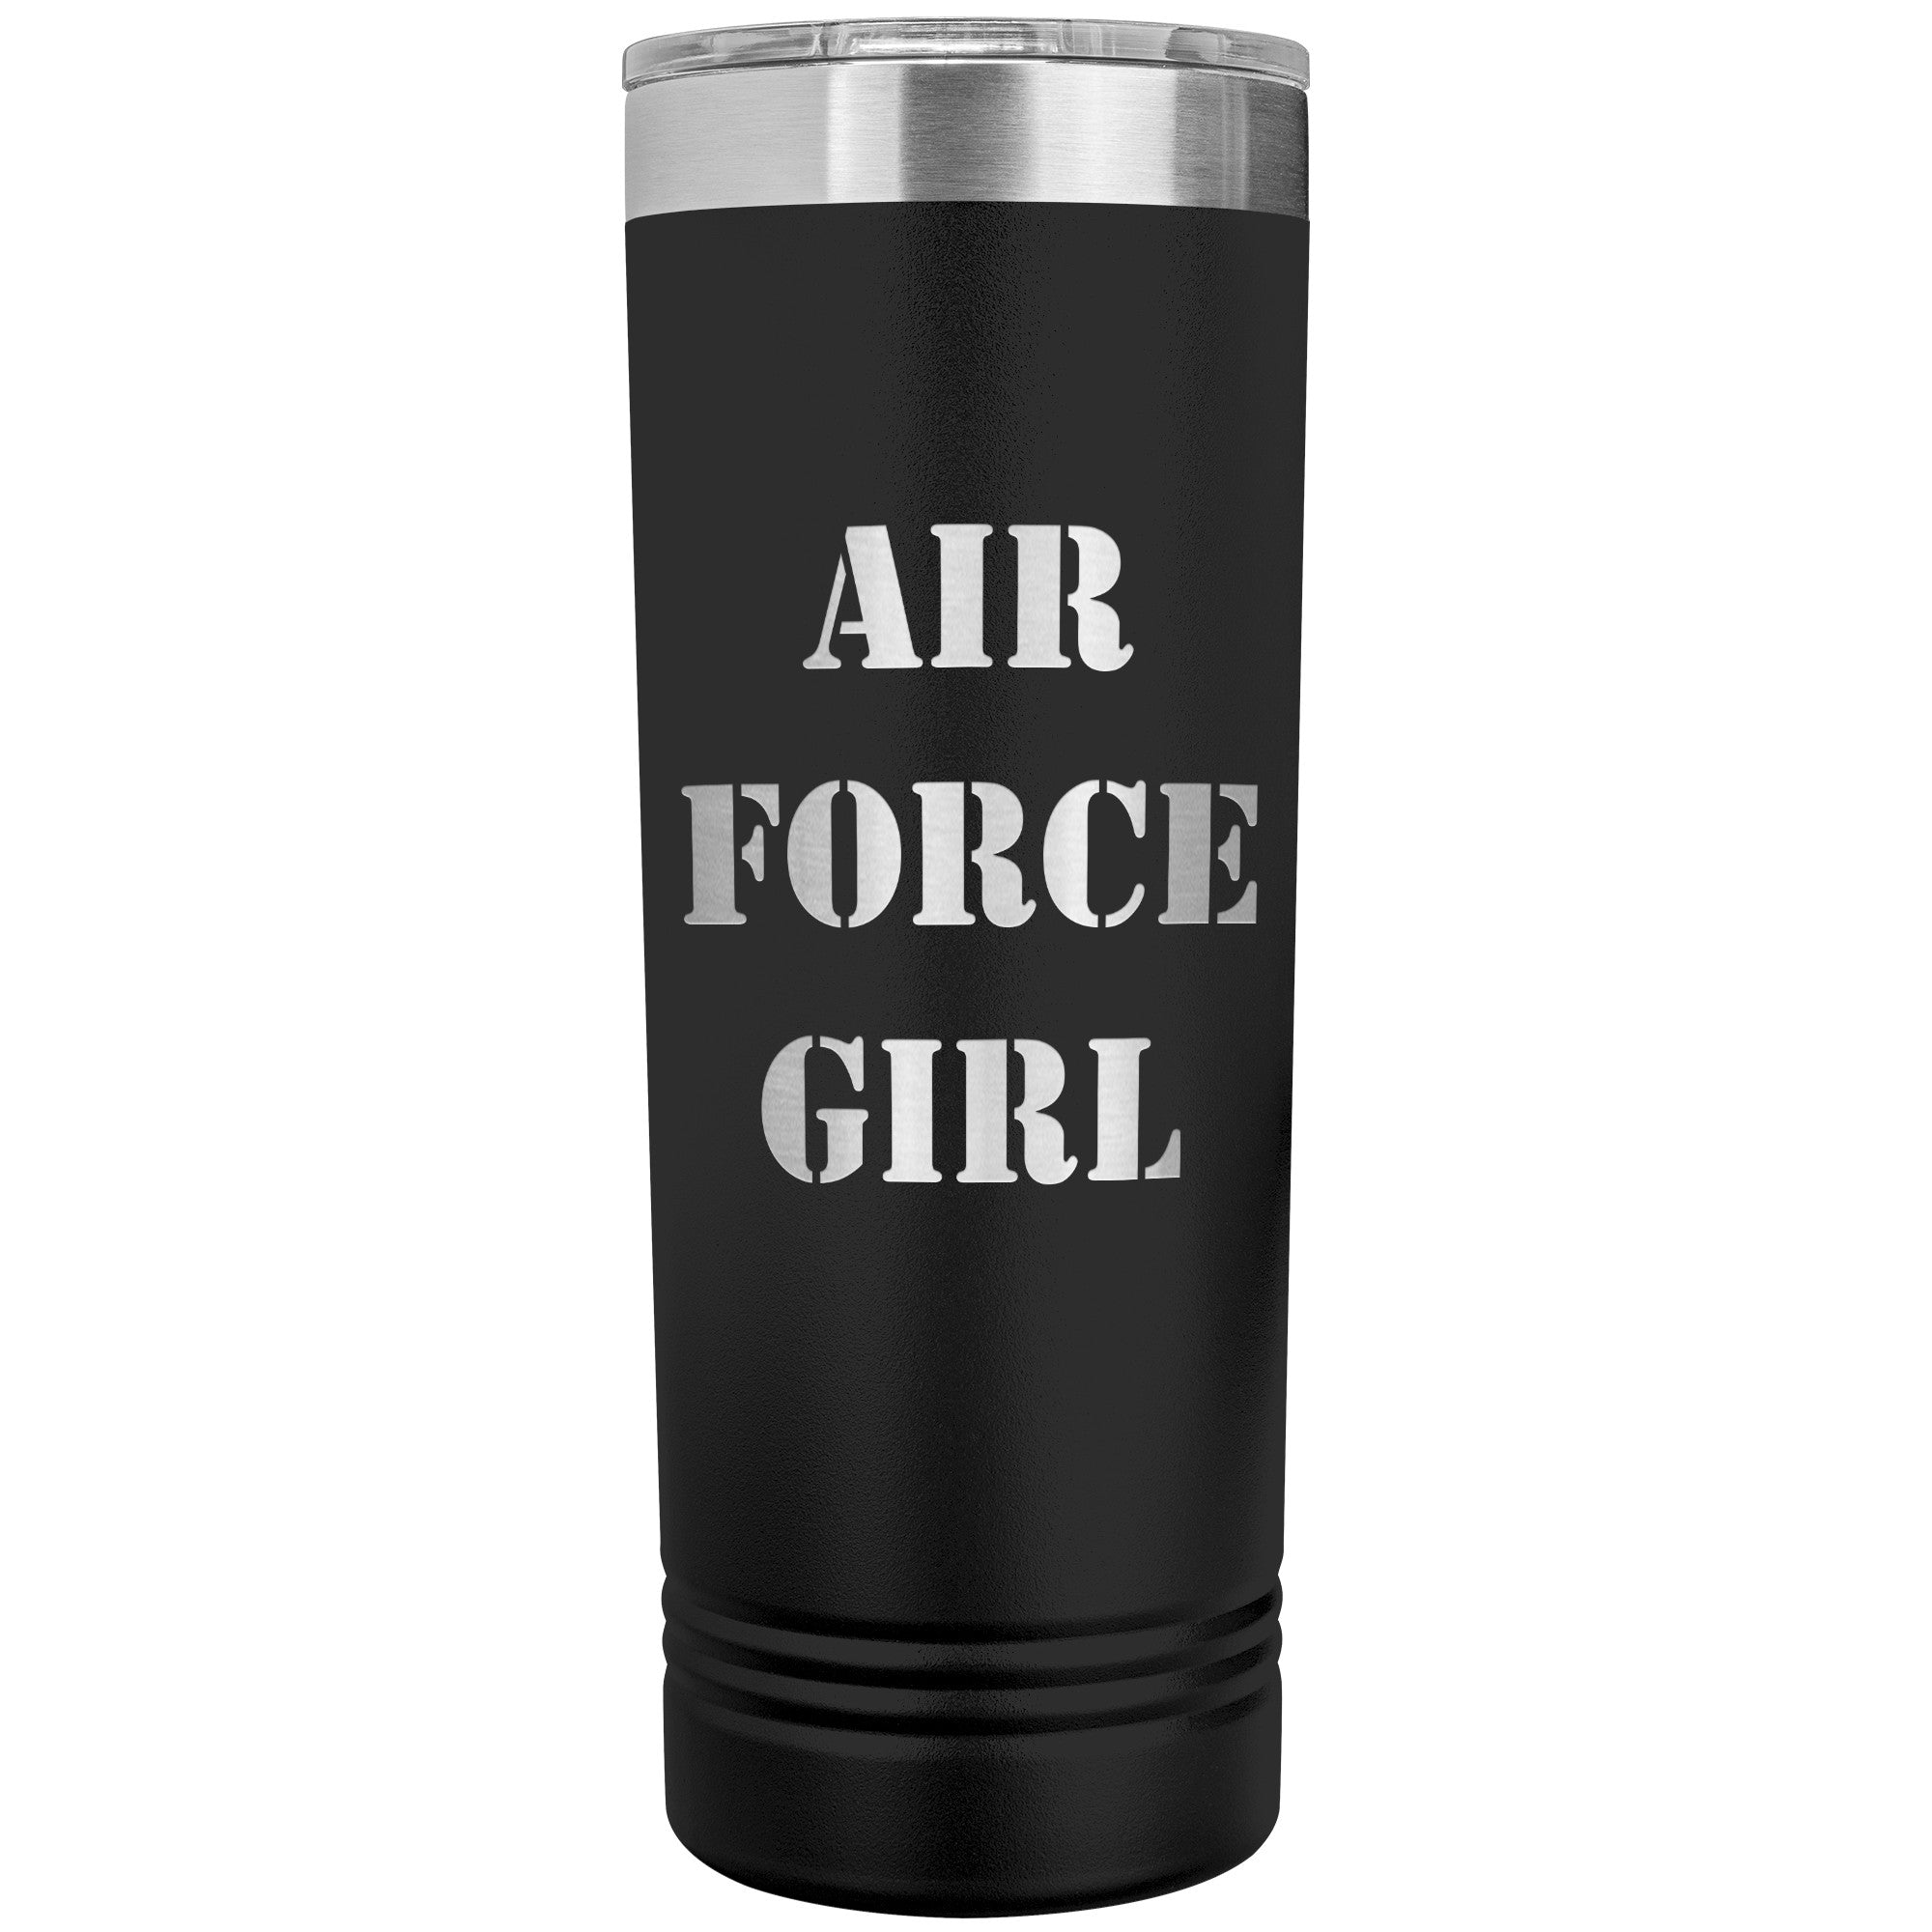 Air Force Girl - 22oz Insulated Skinny Tumbler